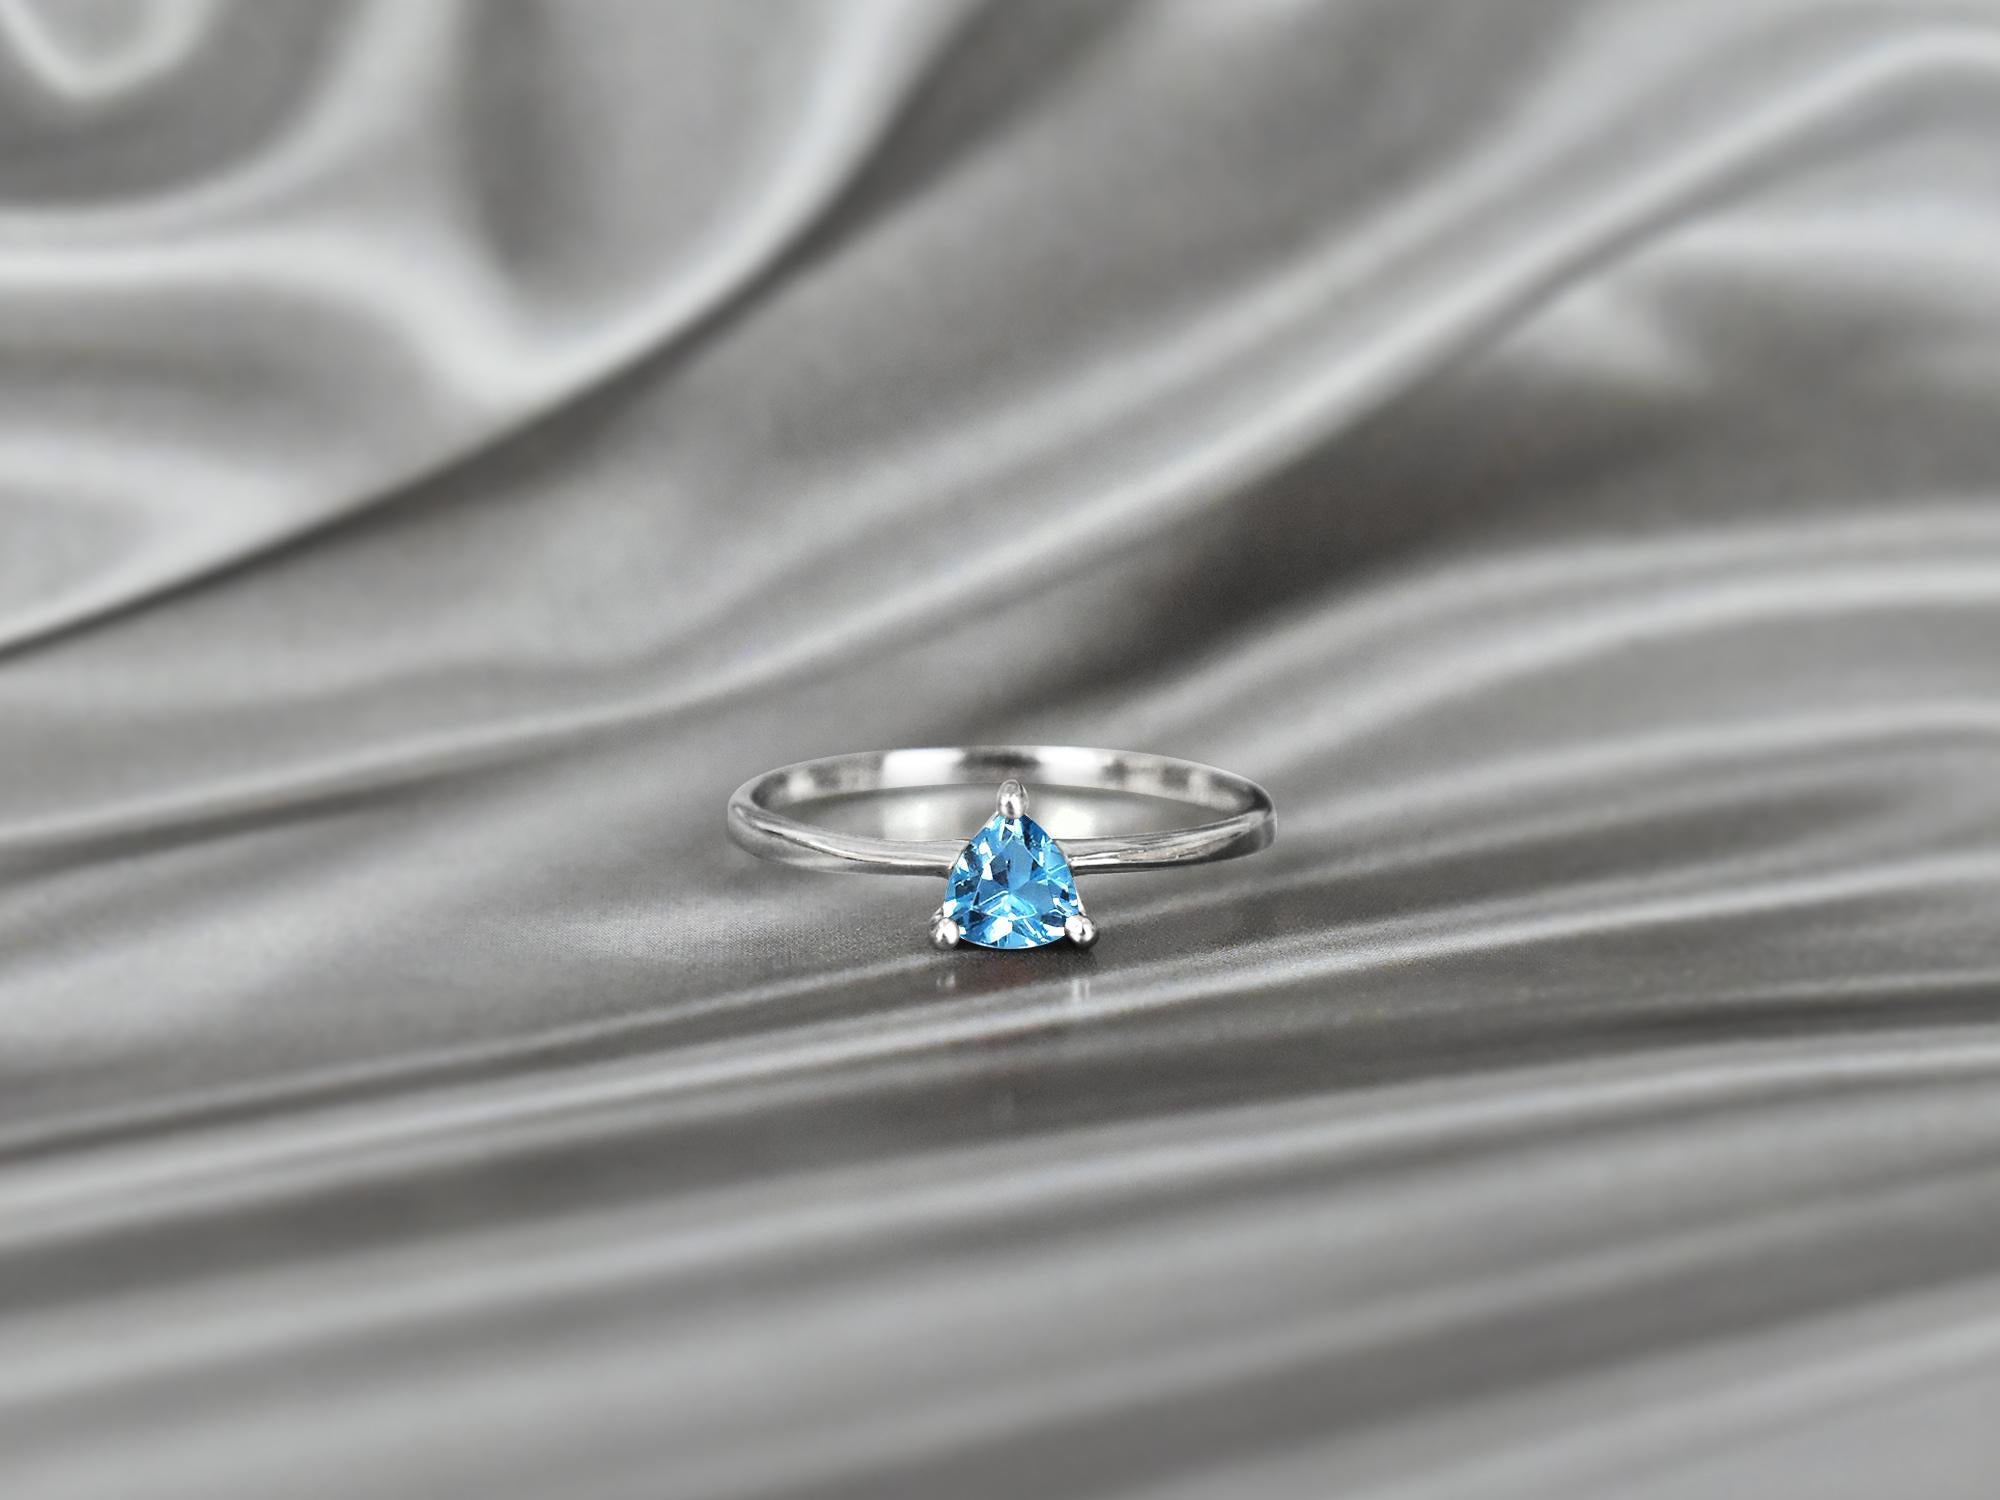 For Sale:  10k Gold Trillion Gemstone 6 mm Trillion Gemstone Engagement Ring Stackable Ring 8